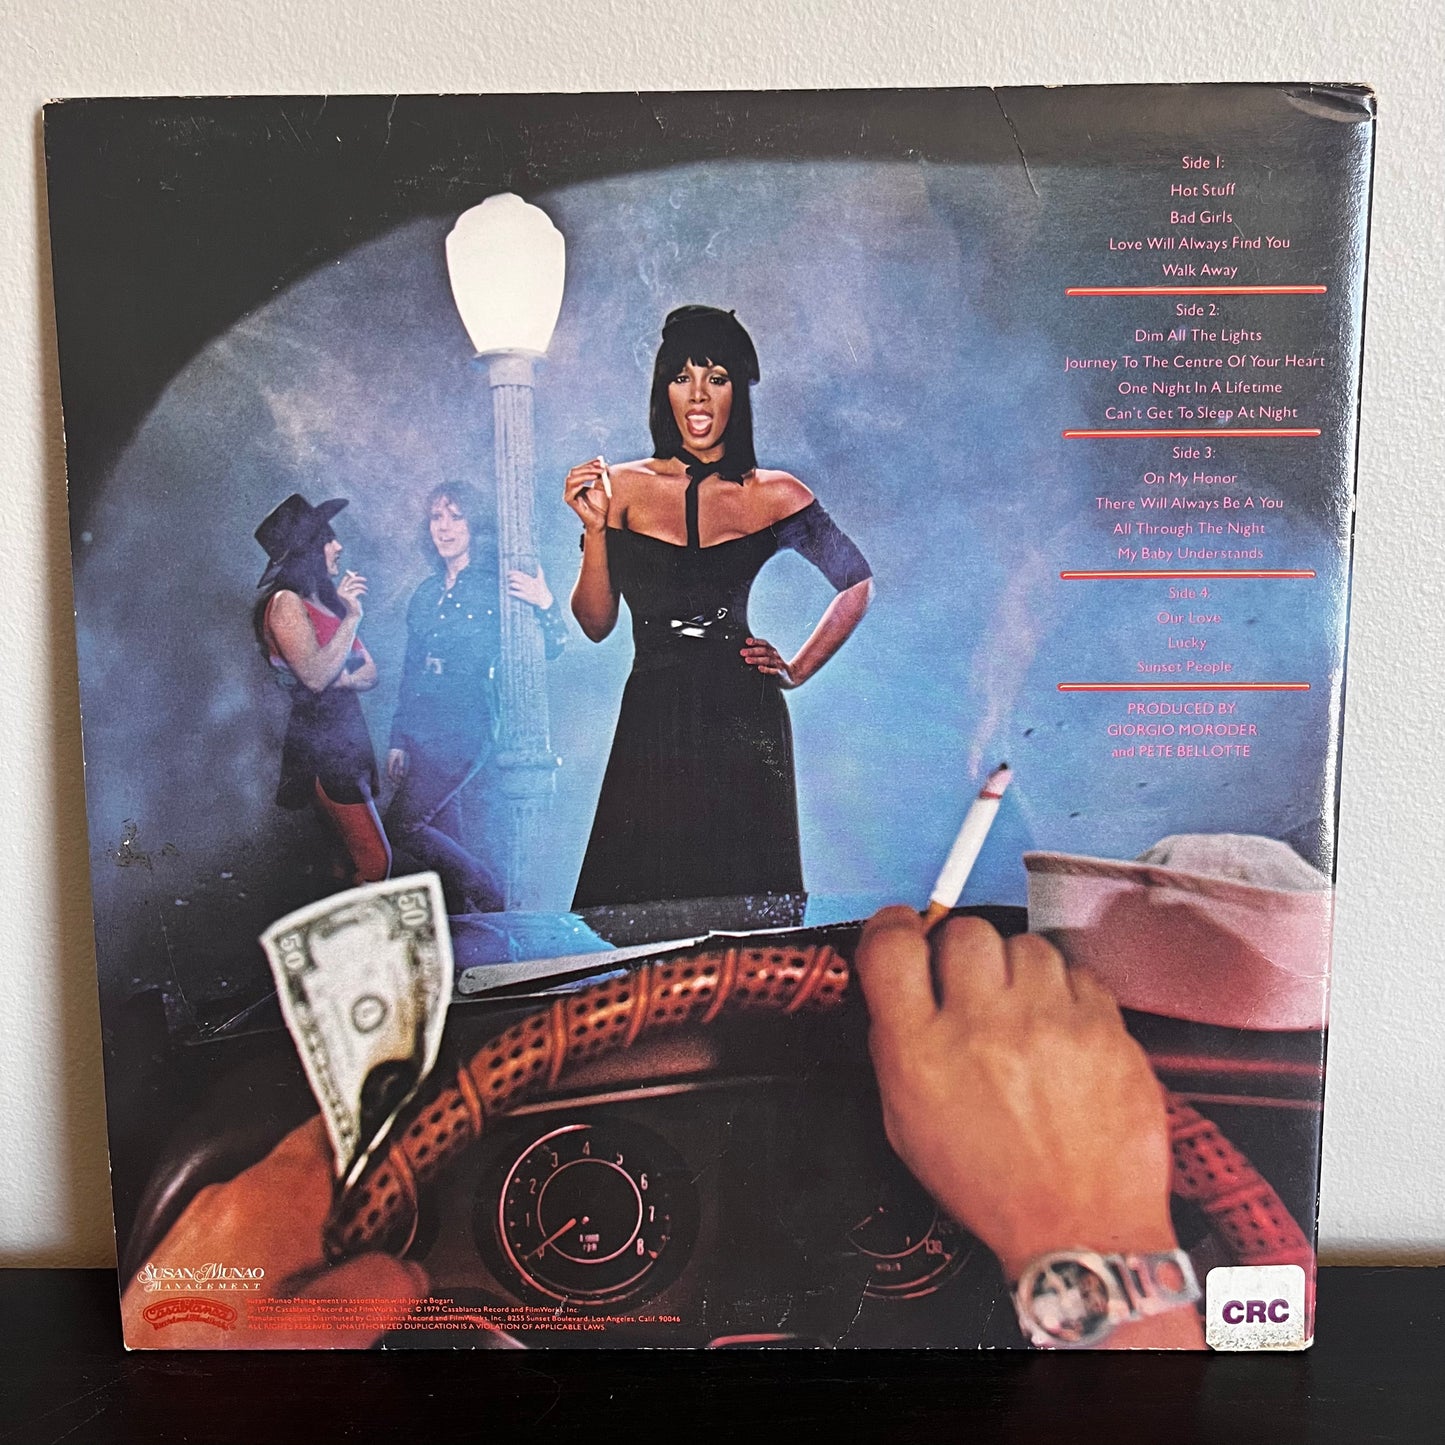 Bad Girls - Donna Summer Used Vinyl 1979 NBLP-2-7150 VG+ Gatefold